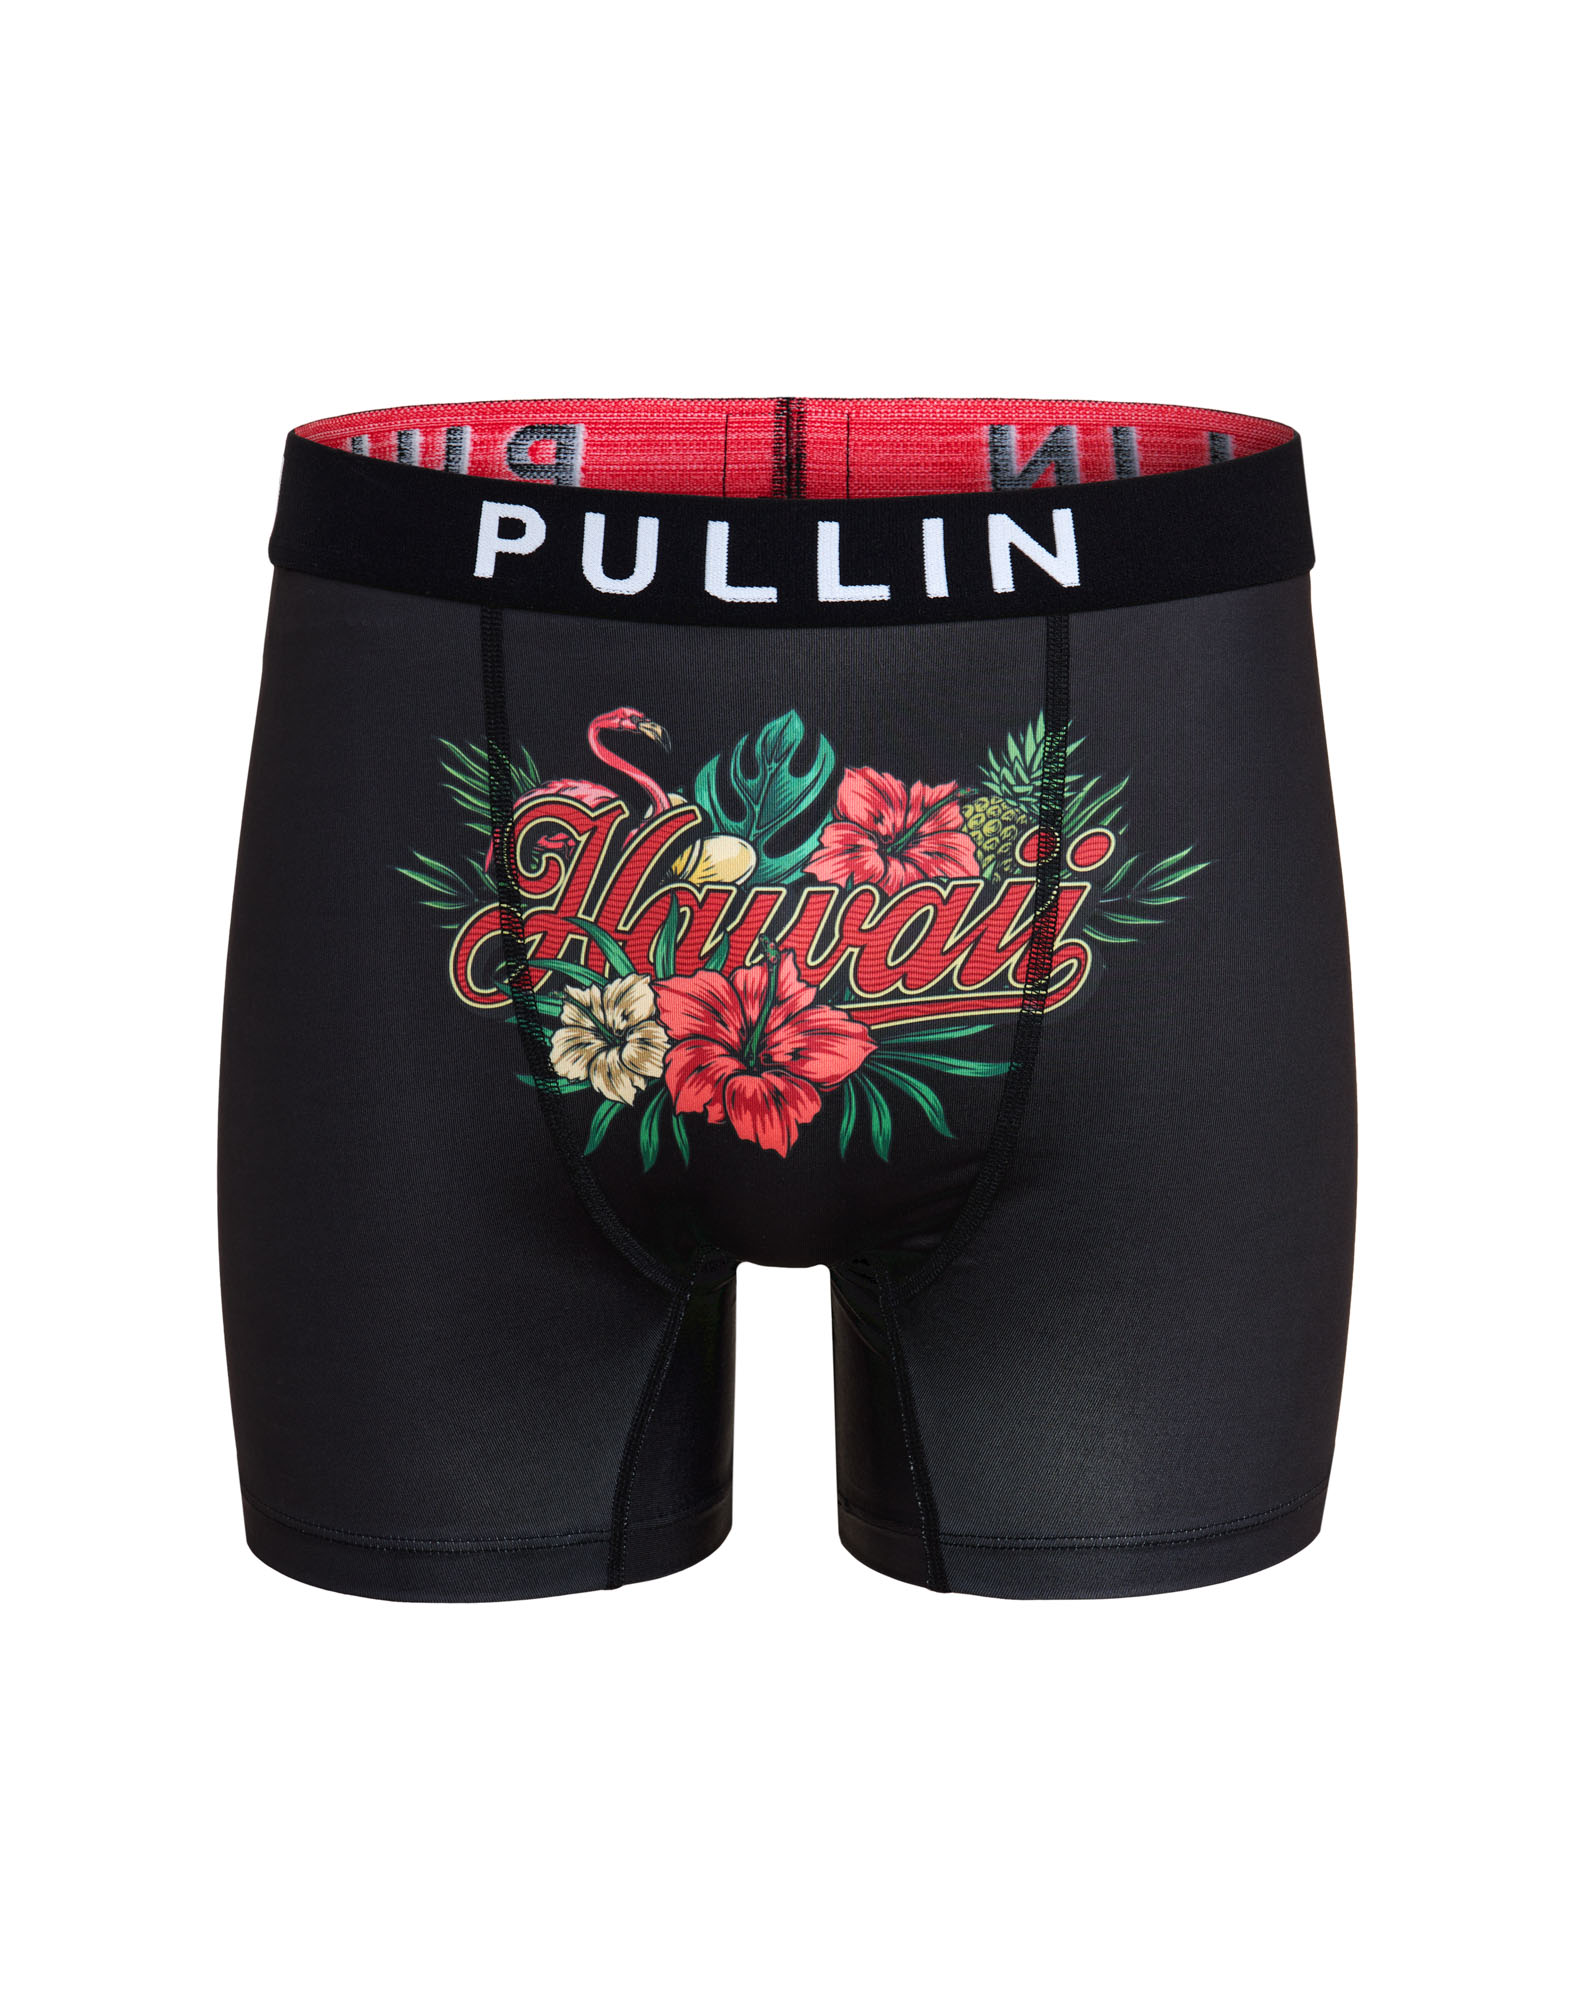 MULTICOLORED MEN'S TRUNK FASHION 2 WAIHA - Men's underwear PULLIN